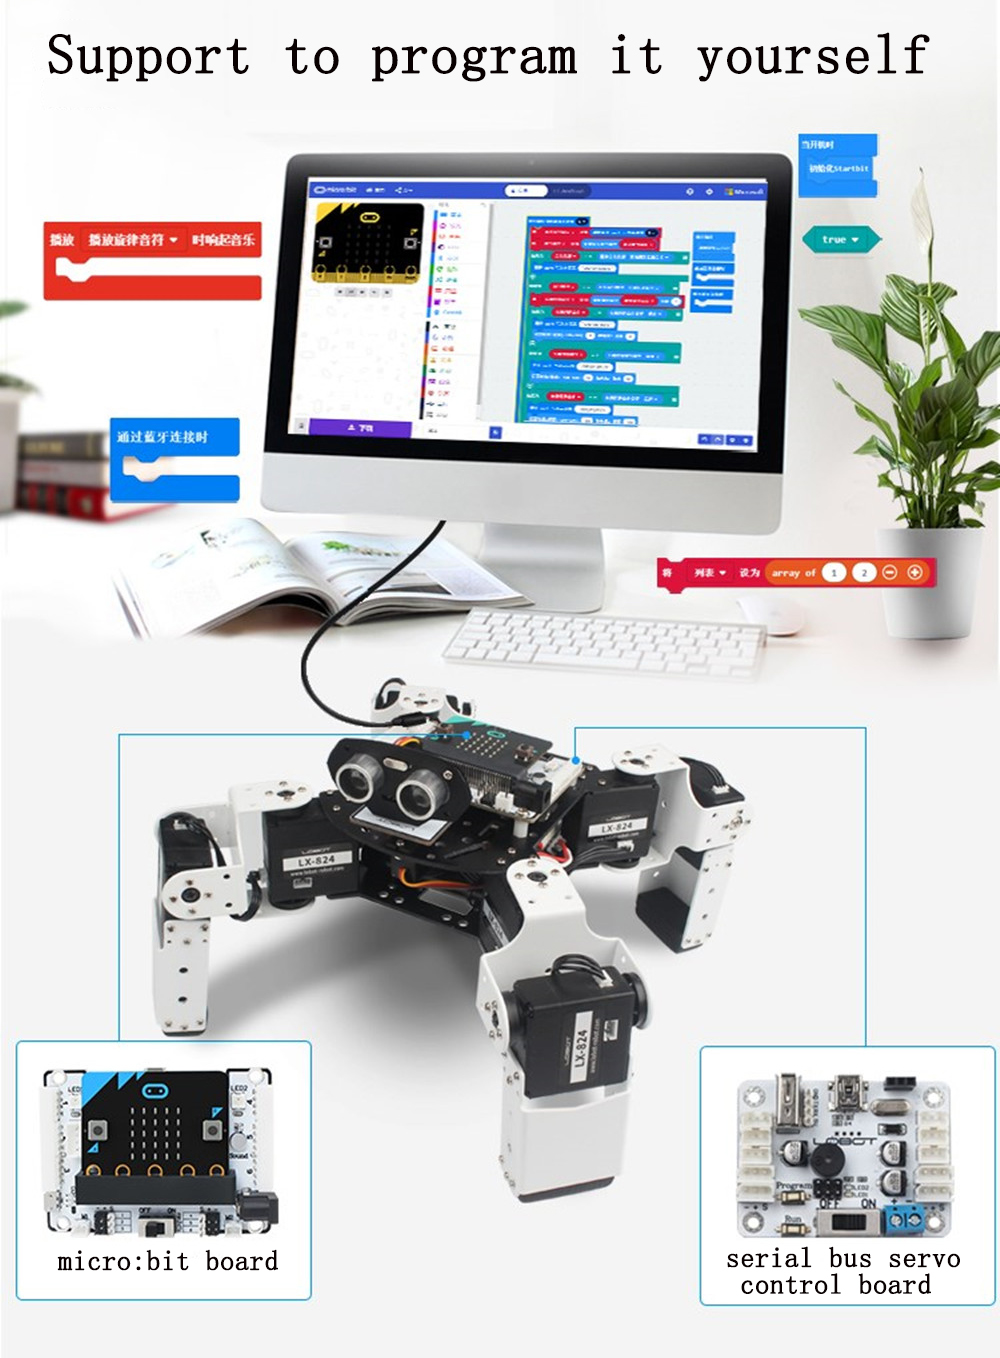 LOBOT-Alienbot-Microbit-Programmable-Multifunctional-PCAPP-Control--Smart-RC-Robot-1476889-7